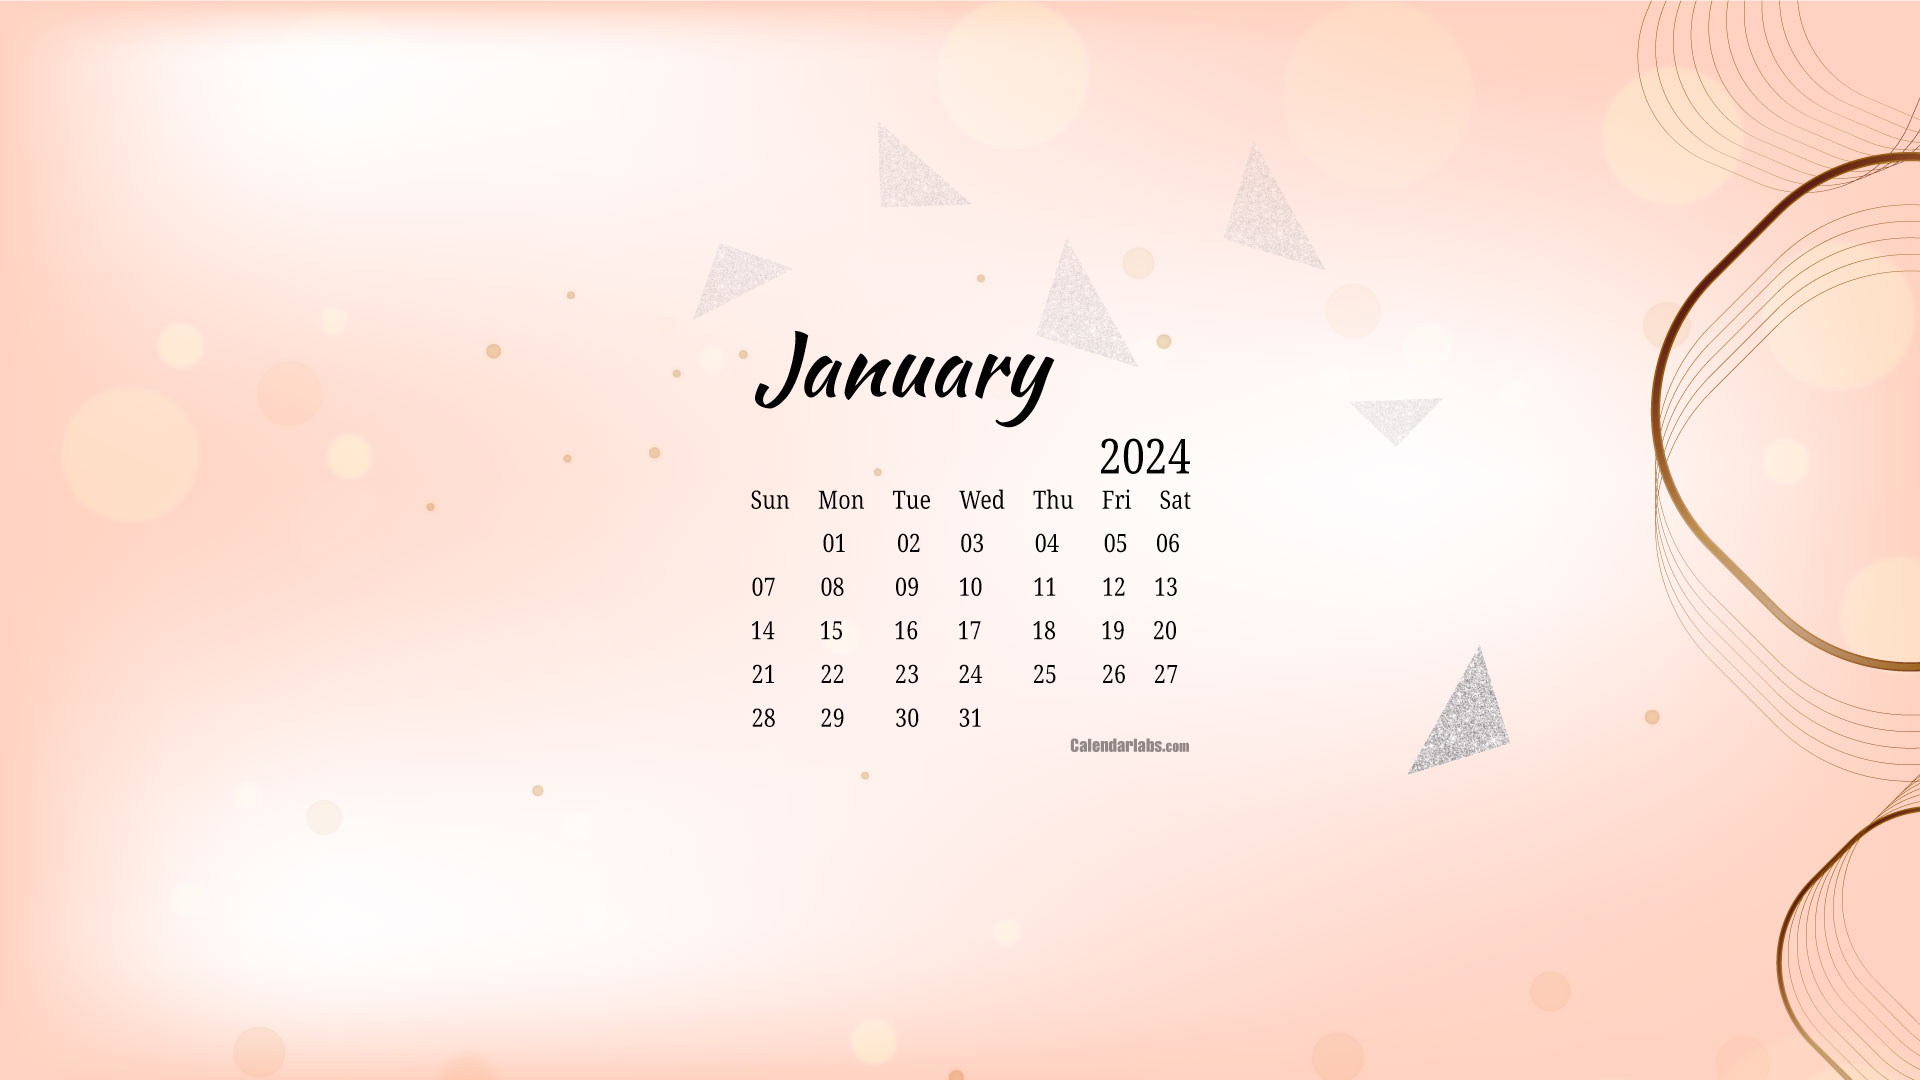 January 2024 Desktop Wallpaper Calendar sayre lizzie